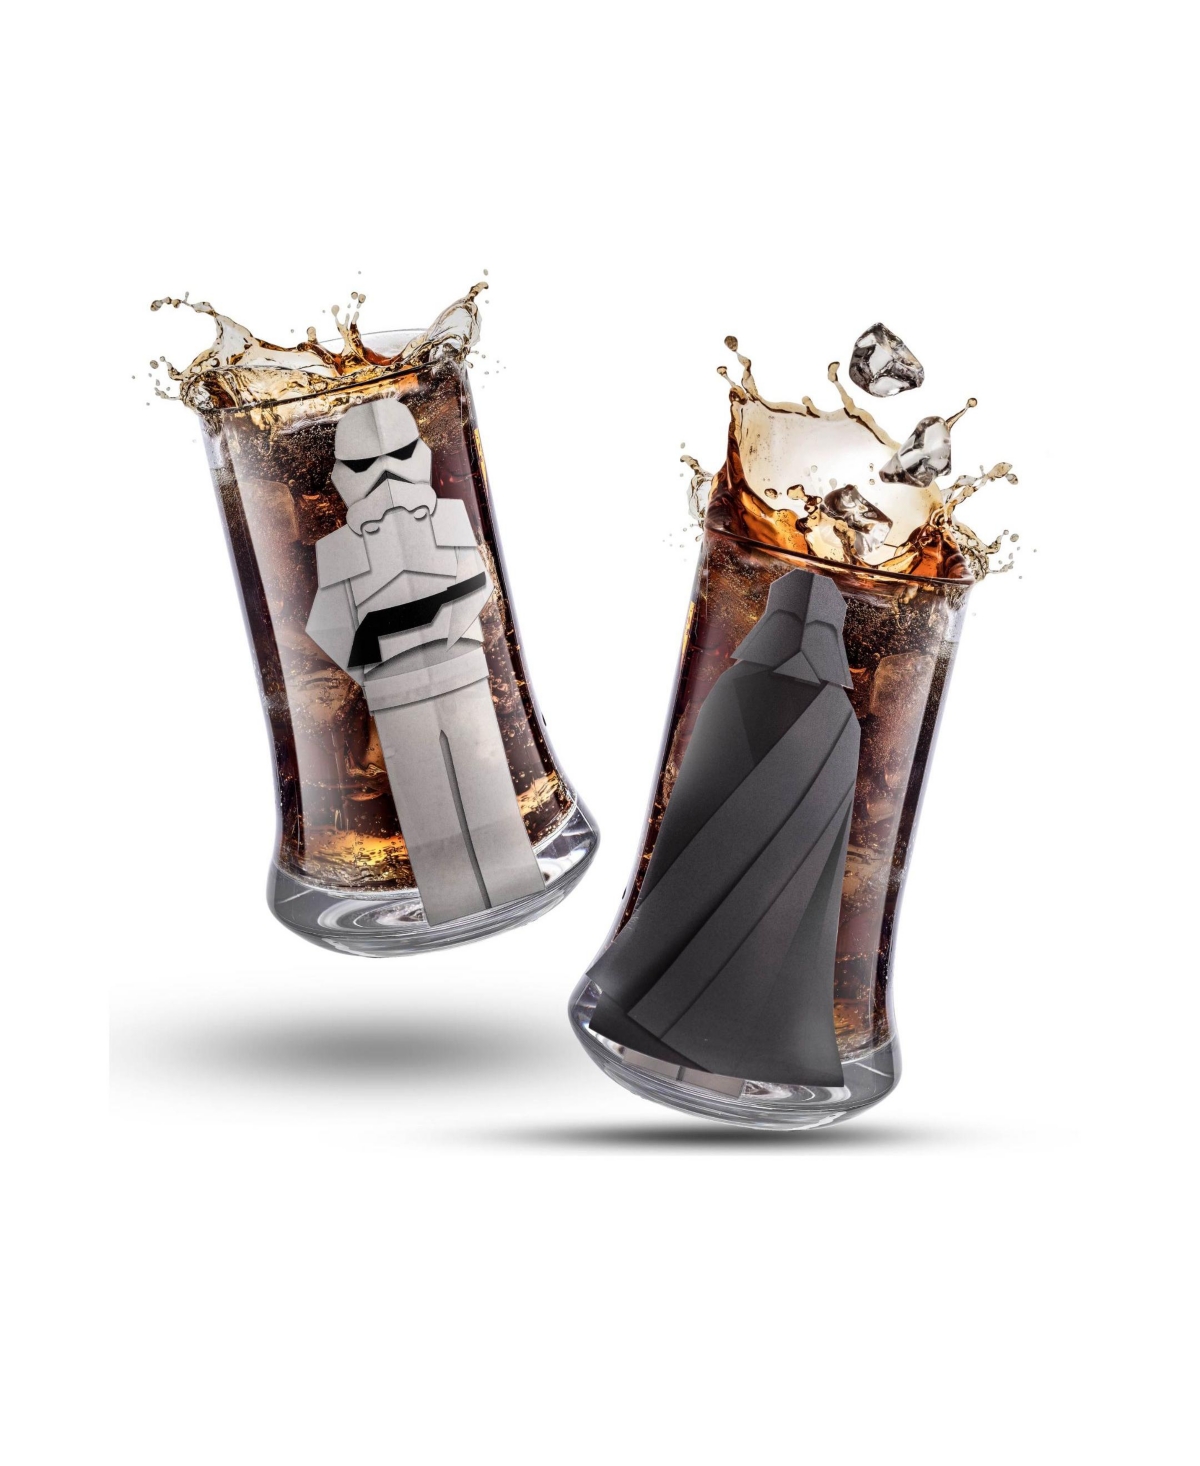 Joyjolt Star Wars Beware Of The Dark Side Drinking Glasses, Set Of 2 In Clear